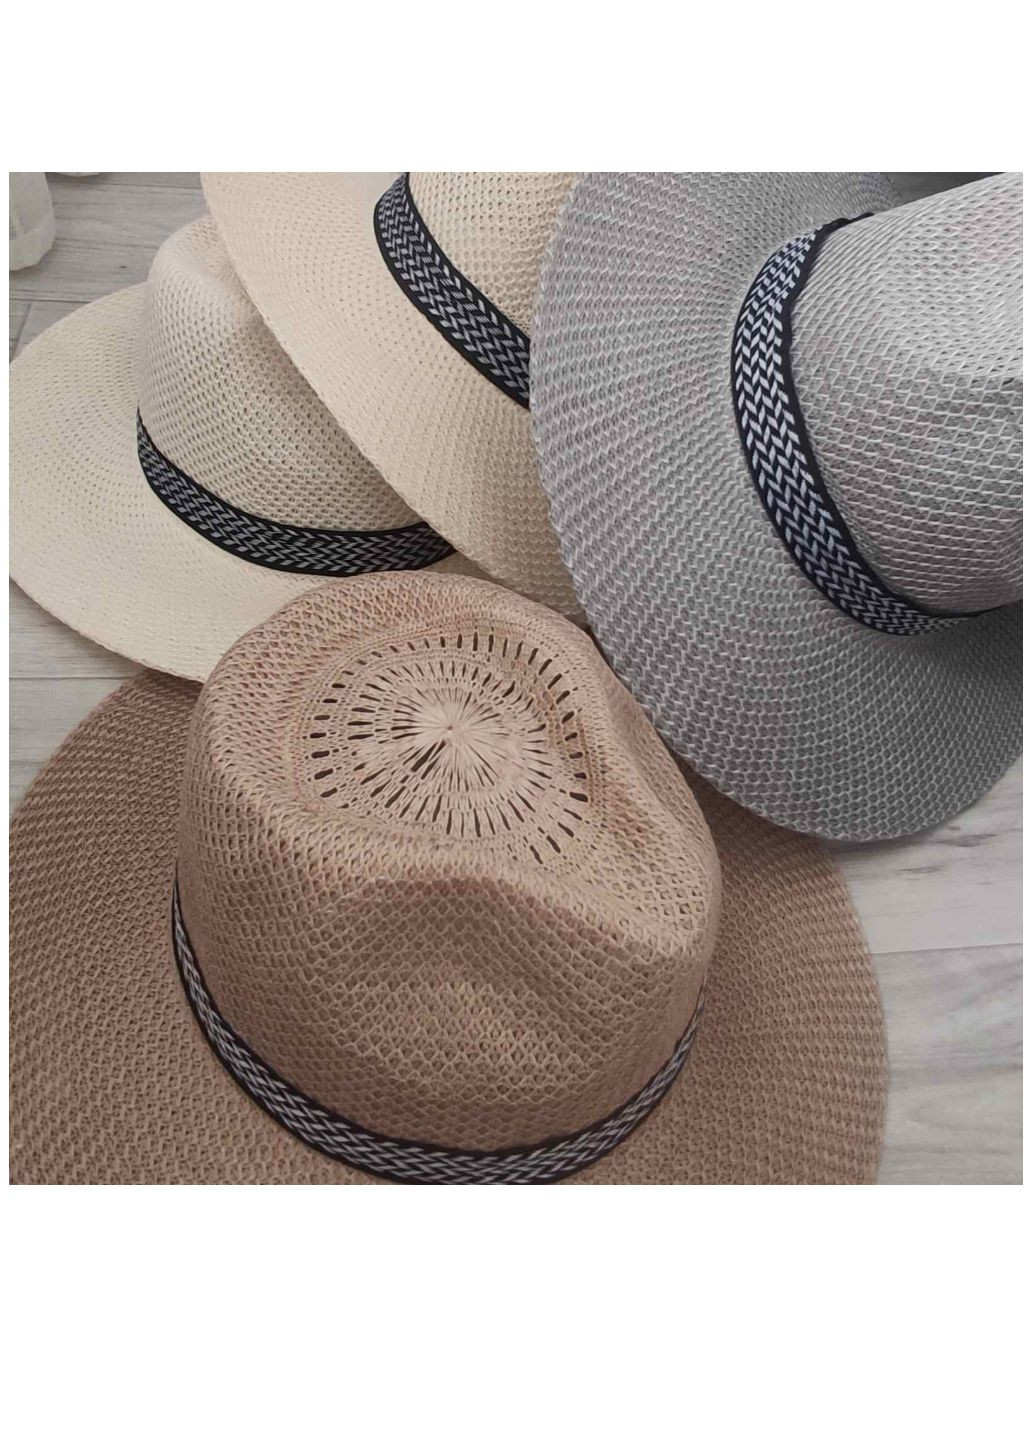 Летняя вязаная шляпа Федора серая с лентой No Brand (259793911)